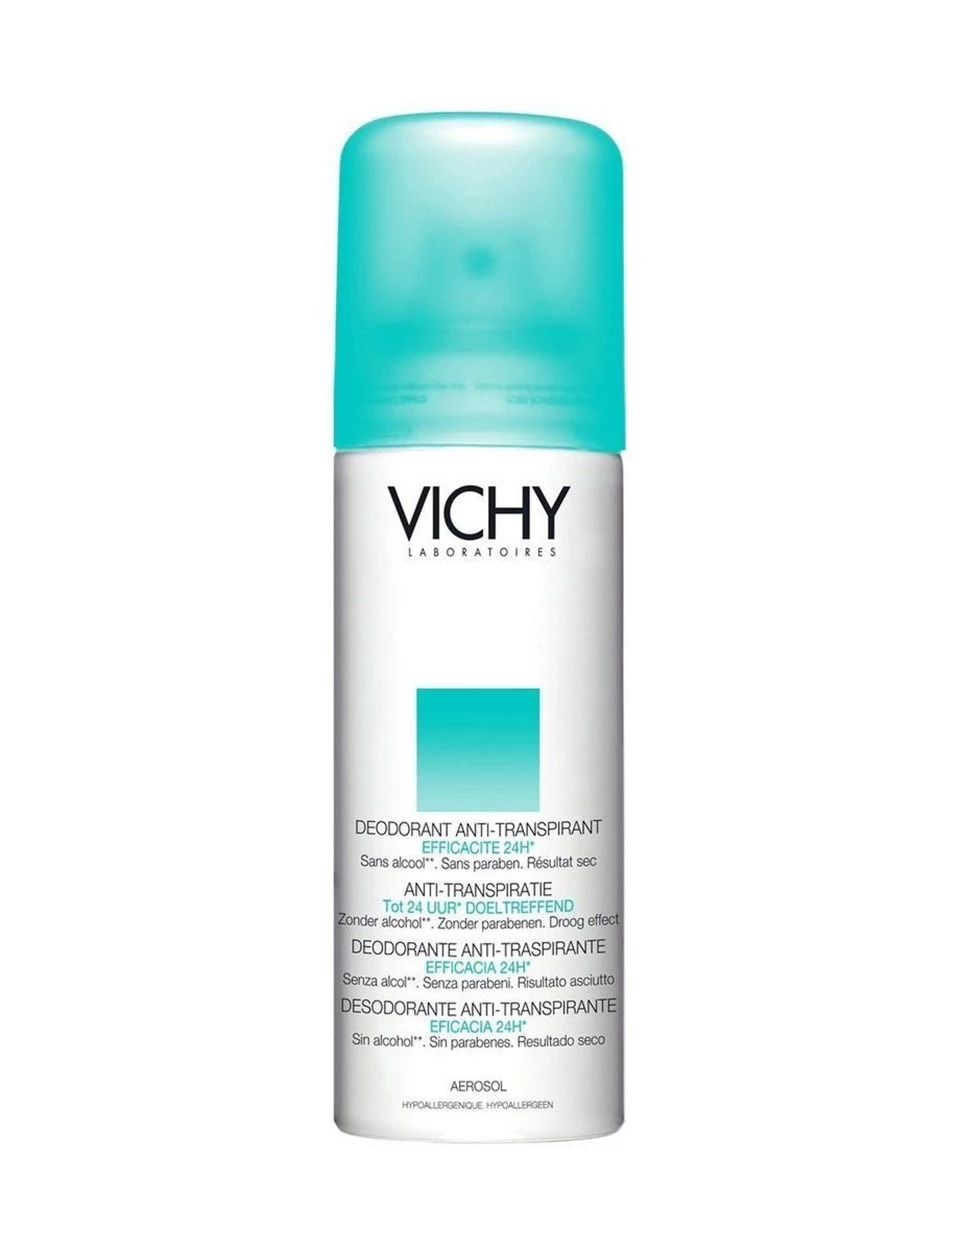 Vichy Anti-Transpirant Terleme Önleyici Deodorant 125ml